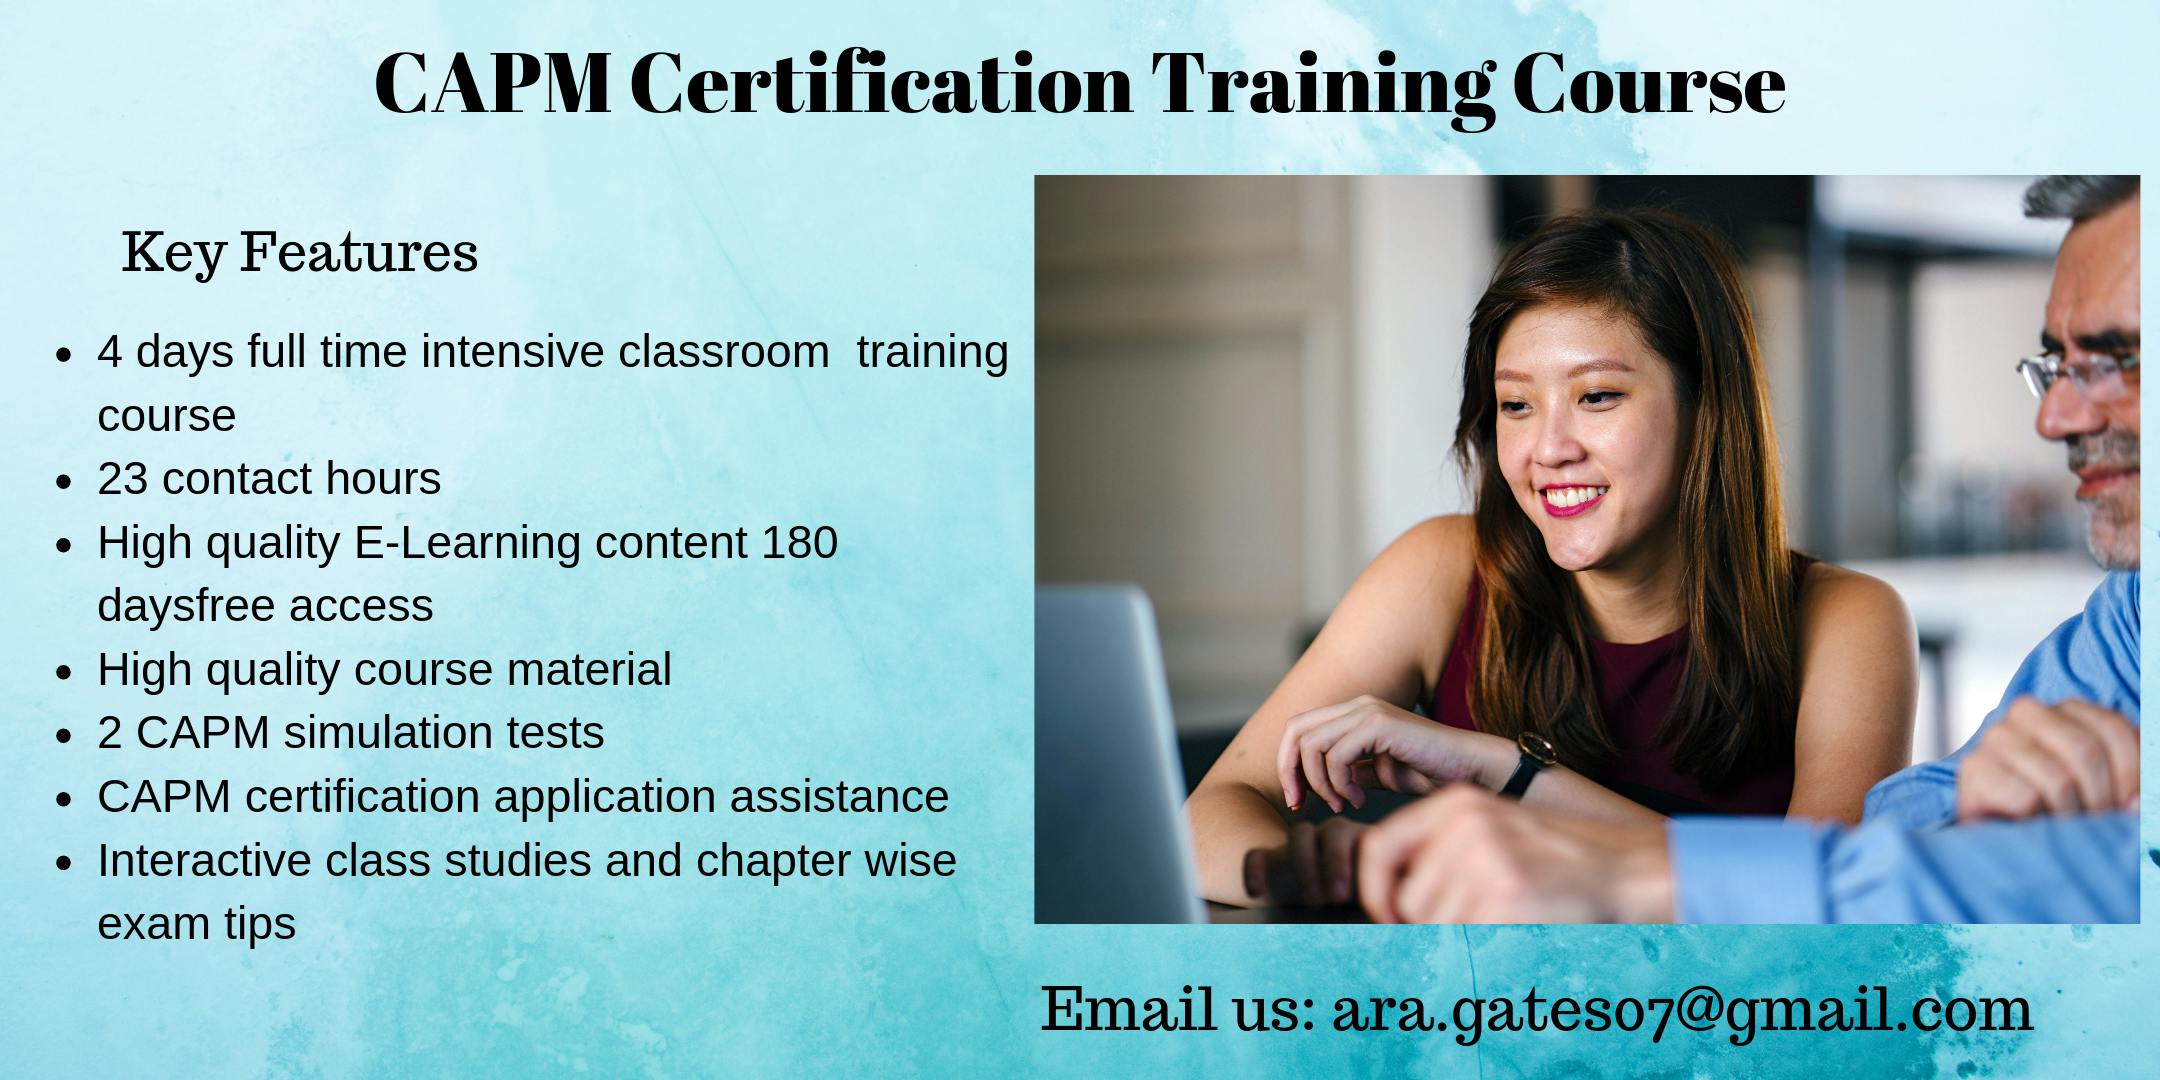 CAPM Certification Course in Greensboro, NC